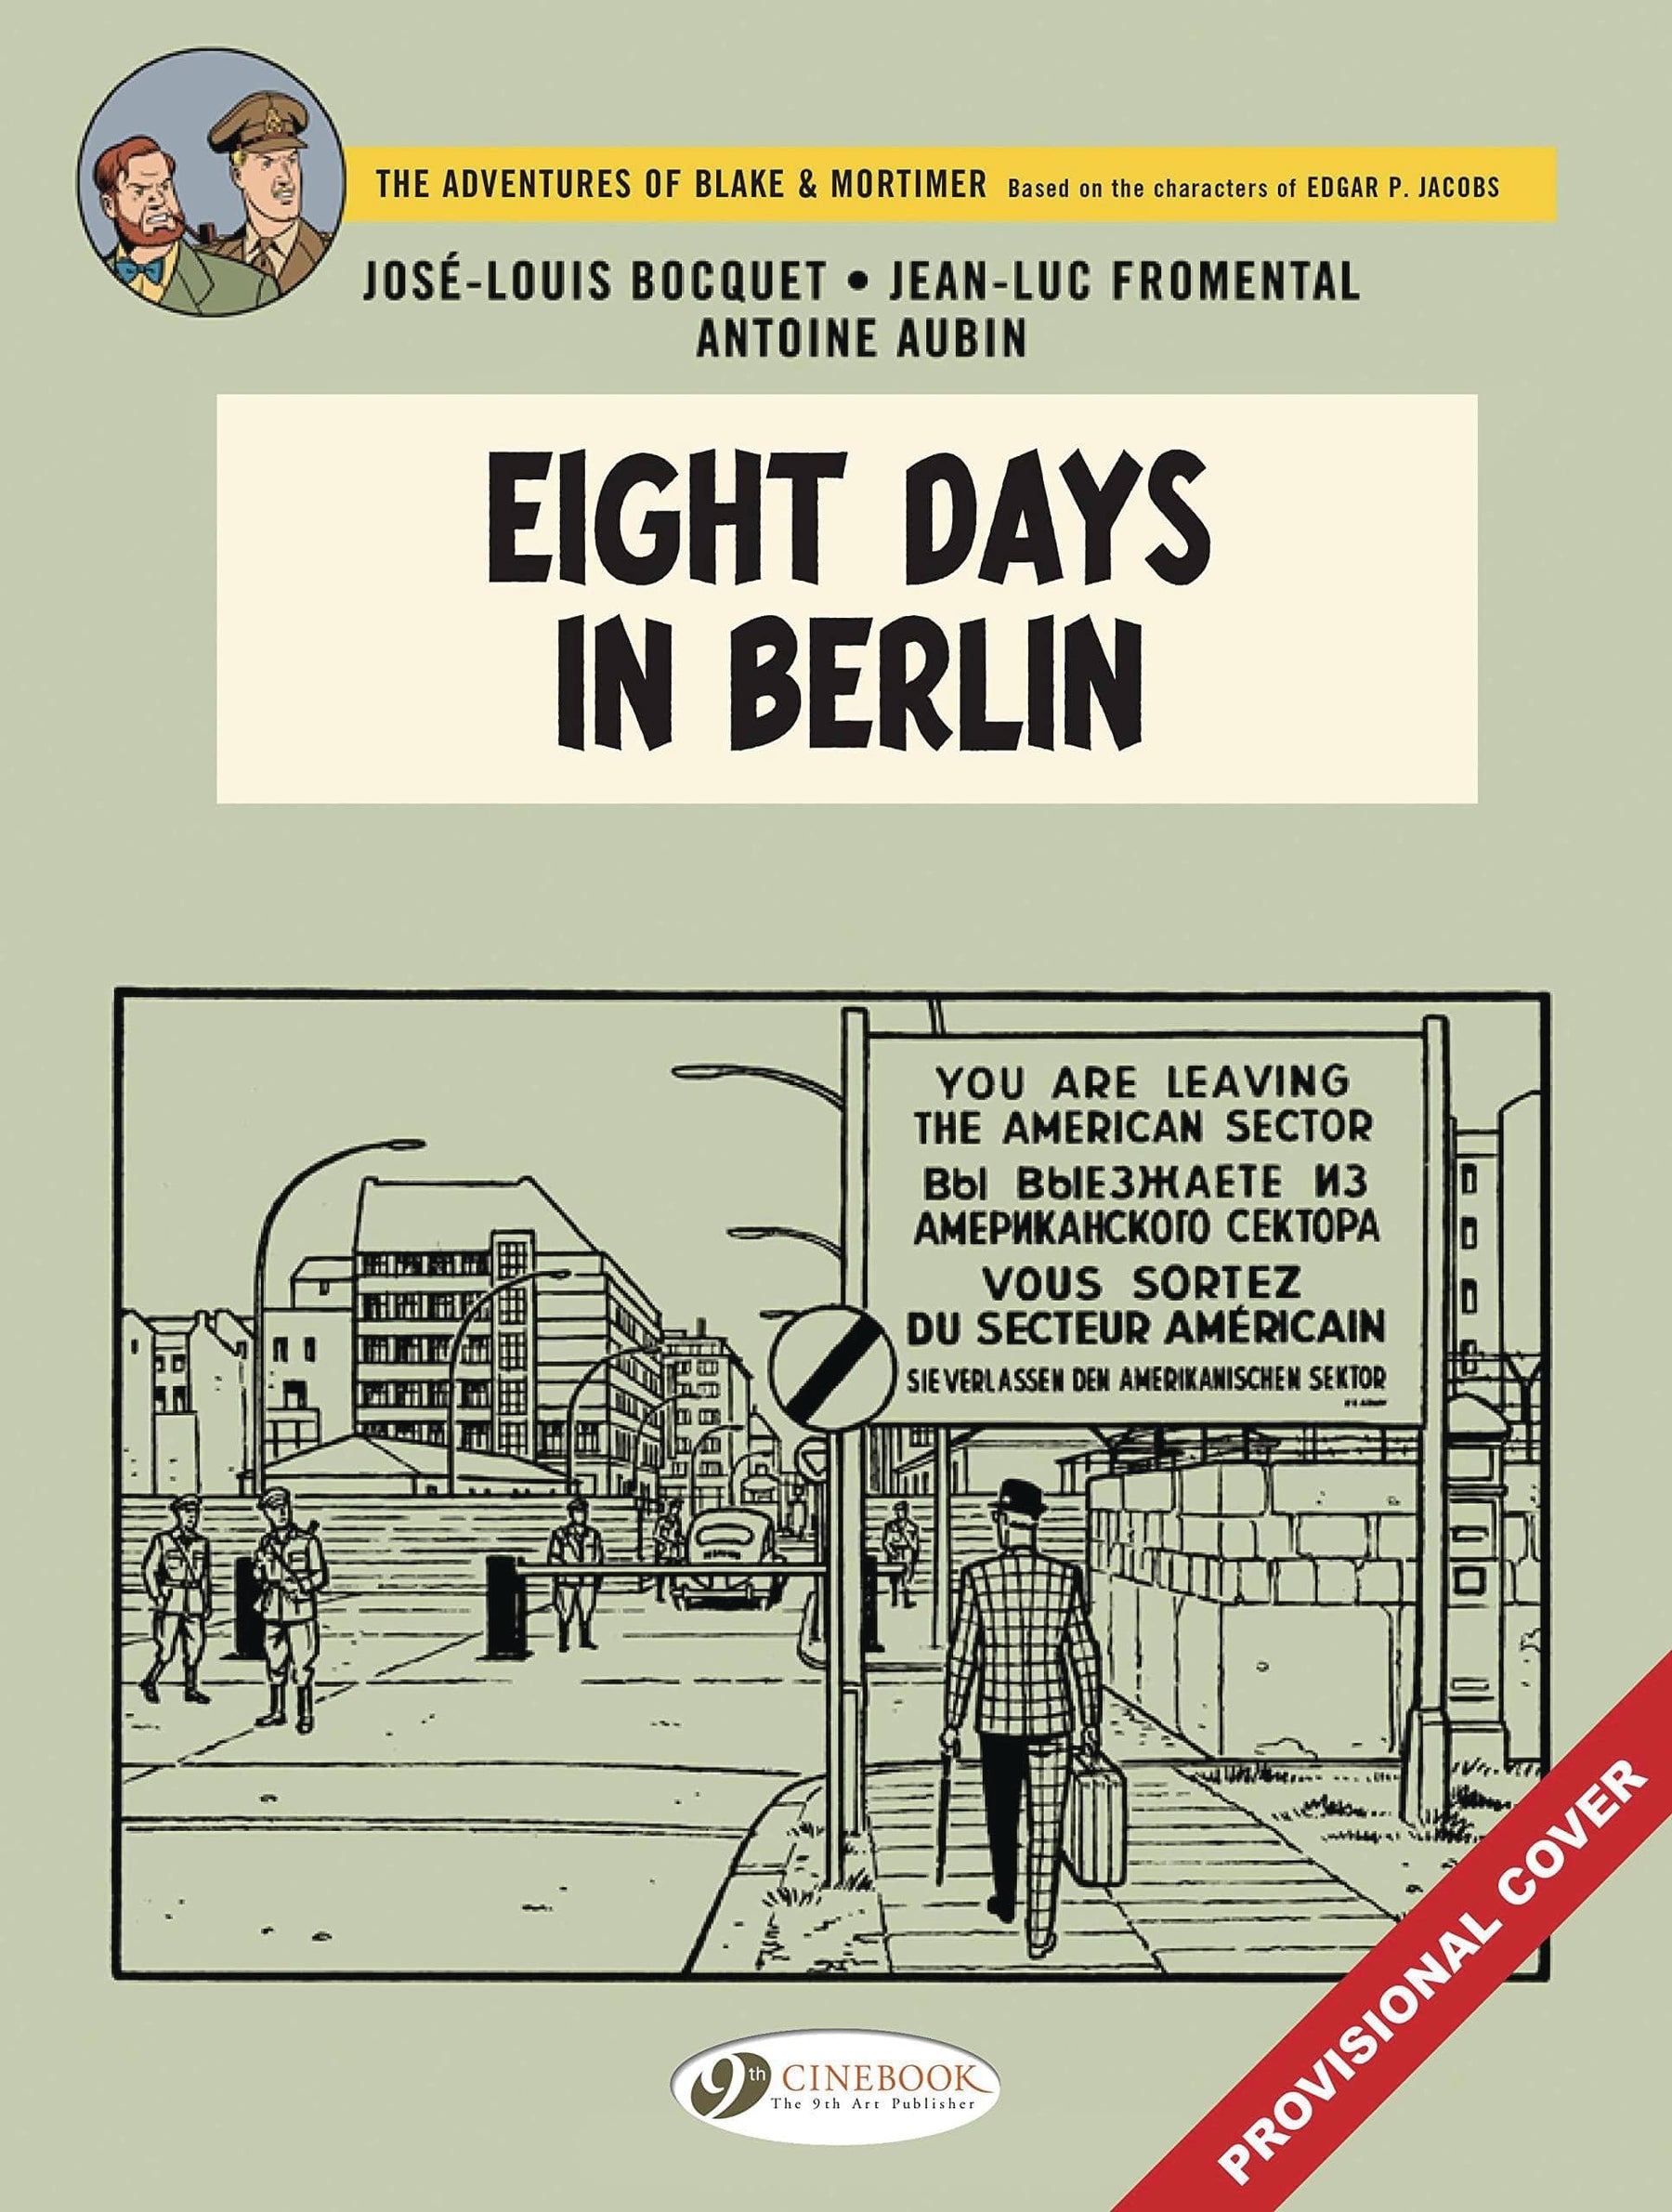 BLAKE & MORTIMER GN VOL 29 EIGHT HOURS IN BERLIN - Third Eye